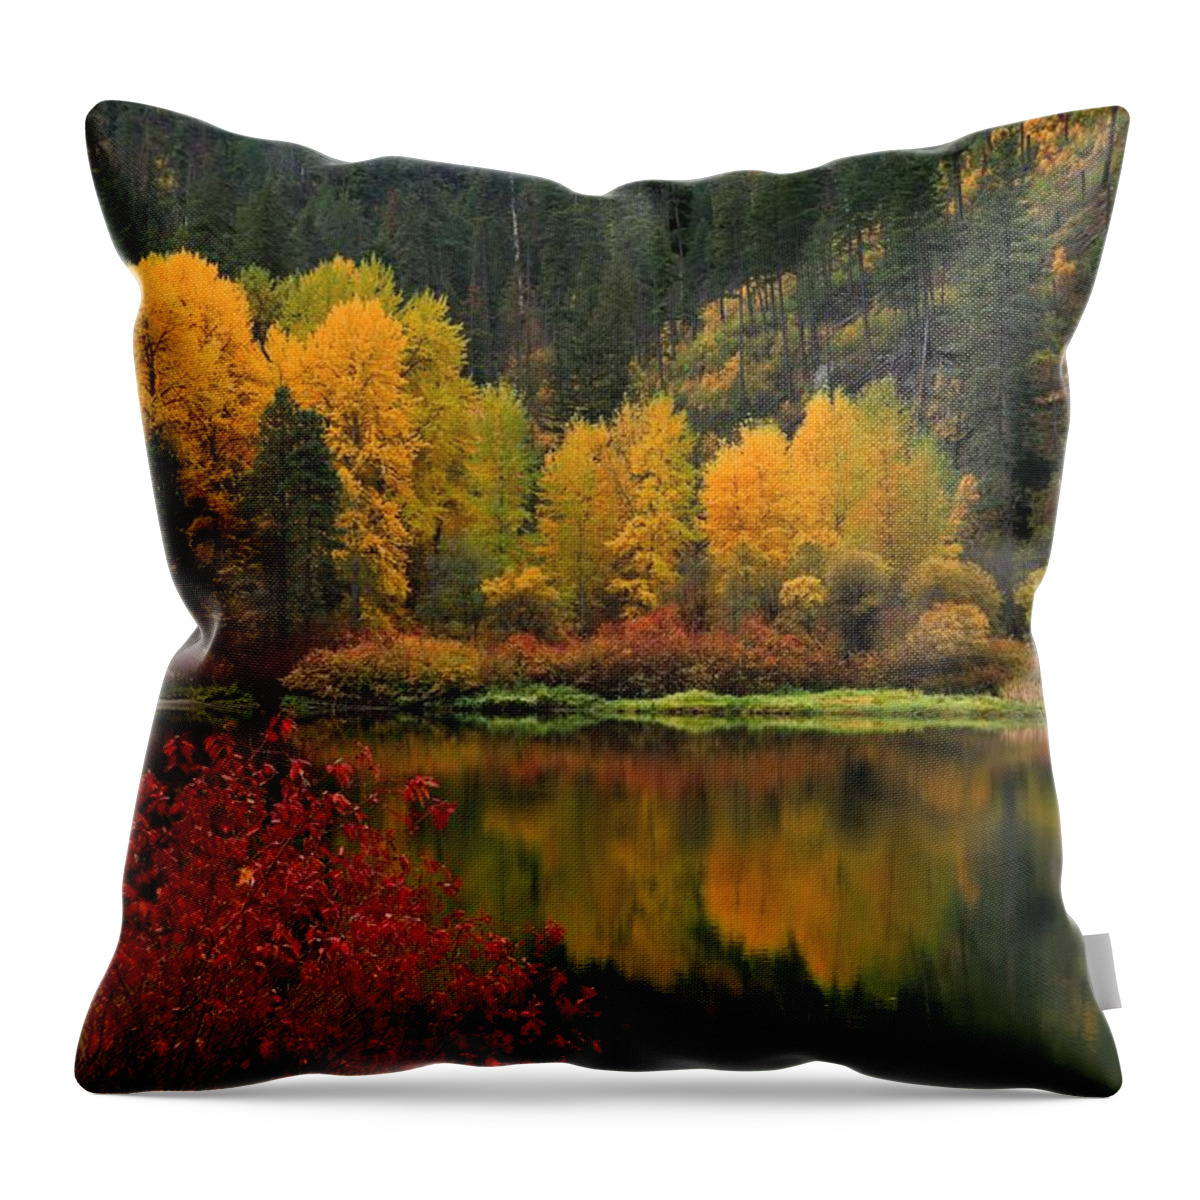 Reflection Of Fall Beauty 2 Throw Pillow featuring the photograph Reflections of fall beauty 2 by Lynn Hopwood